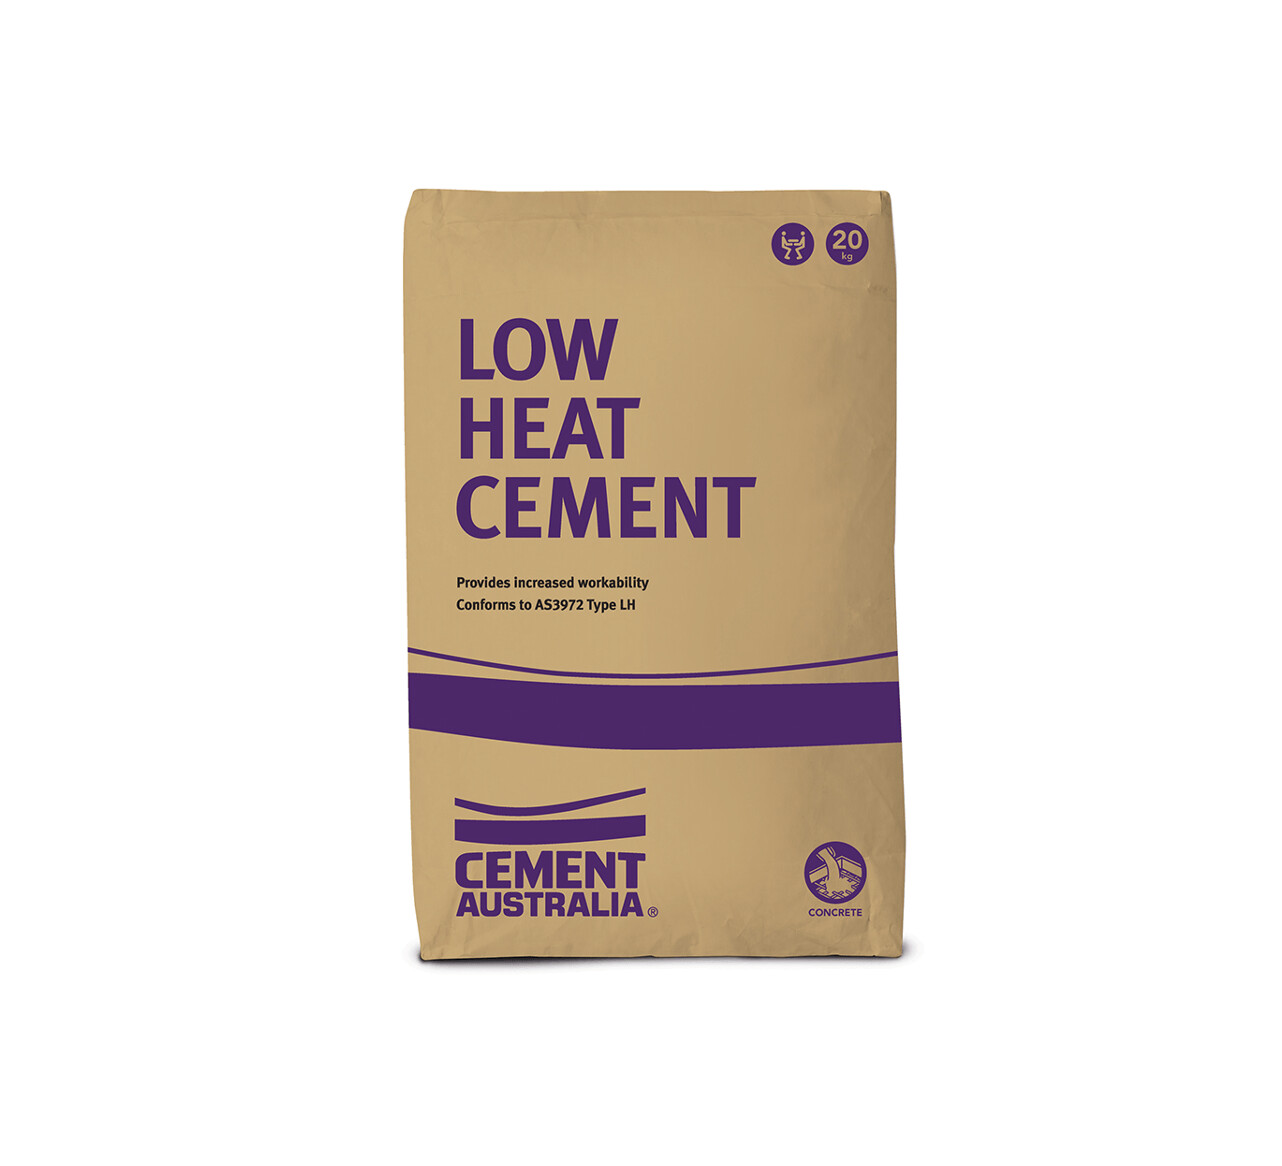 Low heat cement